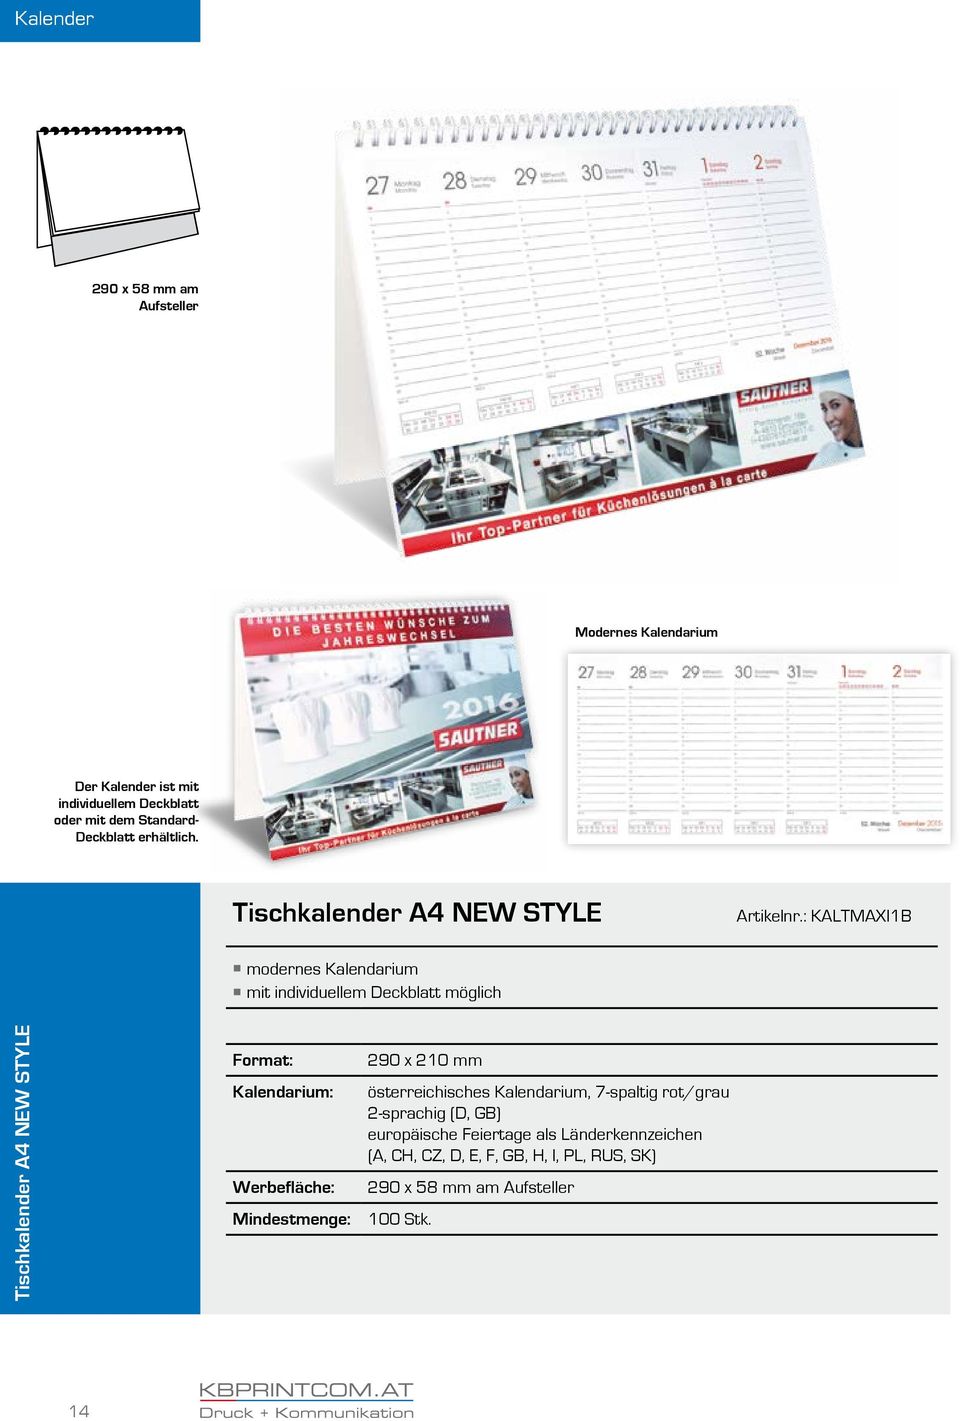 : KALTMAXI1B modernes Kalendarium mit individuellem Deckblatt möglich Tischkalender A4 NEW STYLE Kalendarium: 290 x 210 mm